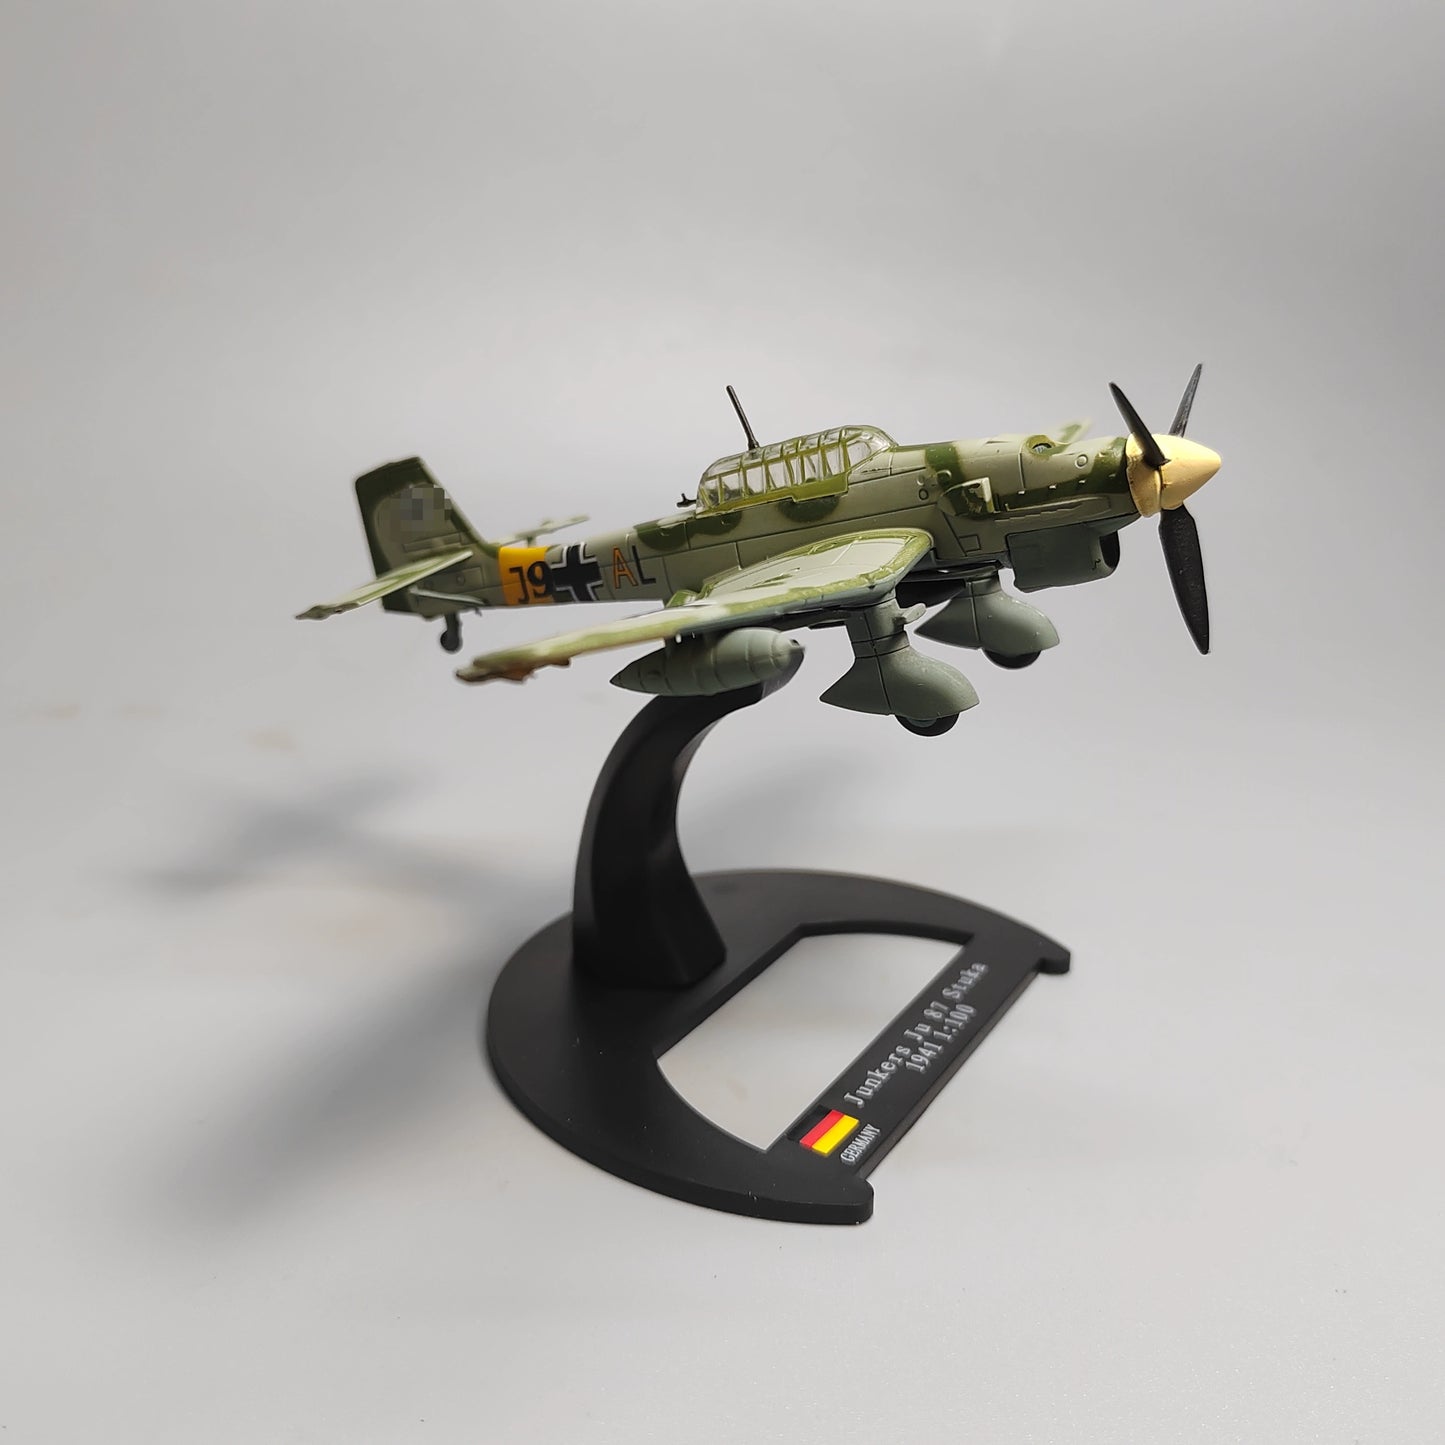 1/100 Scale Junkers Ju 87 Stuka WWII German Dive Bomber Diecast Model Aircraft